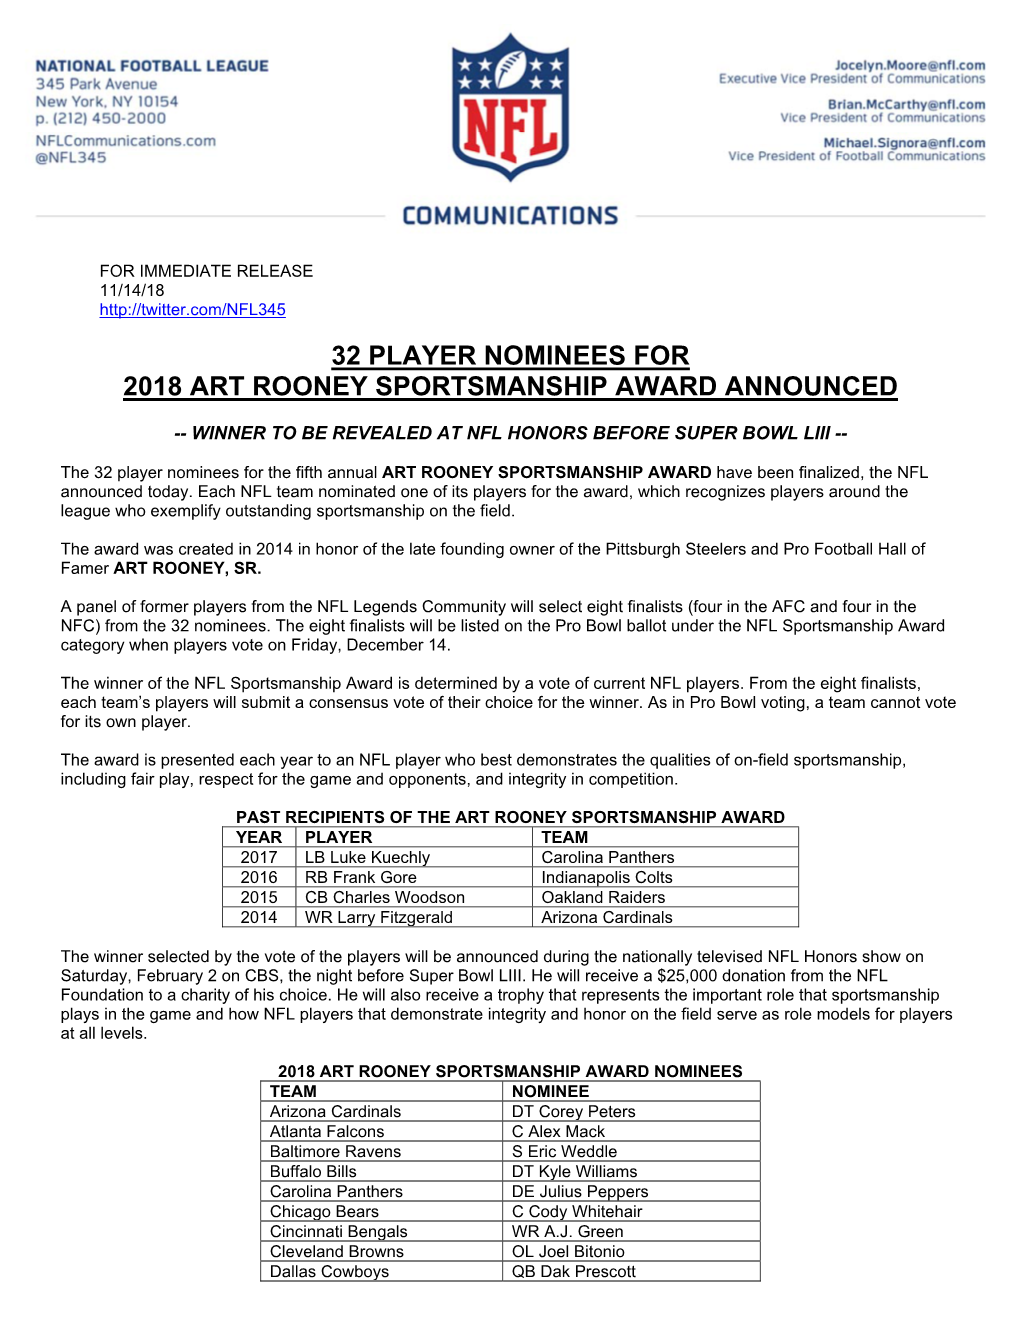 32 Player Nominees for 2018 Art Rooney Sportsmanship Award Announced